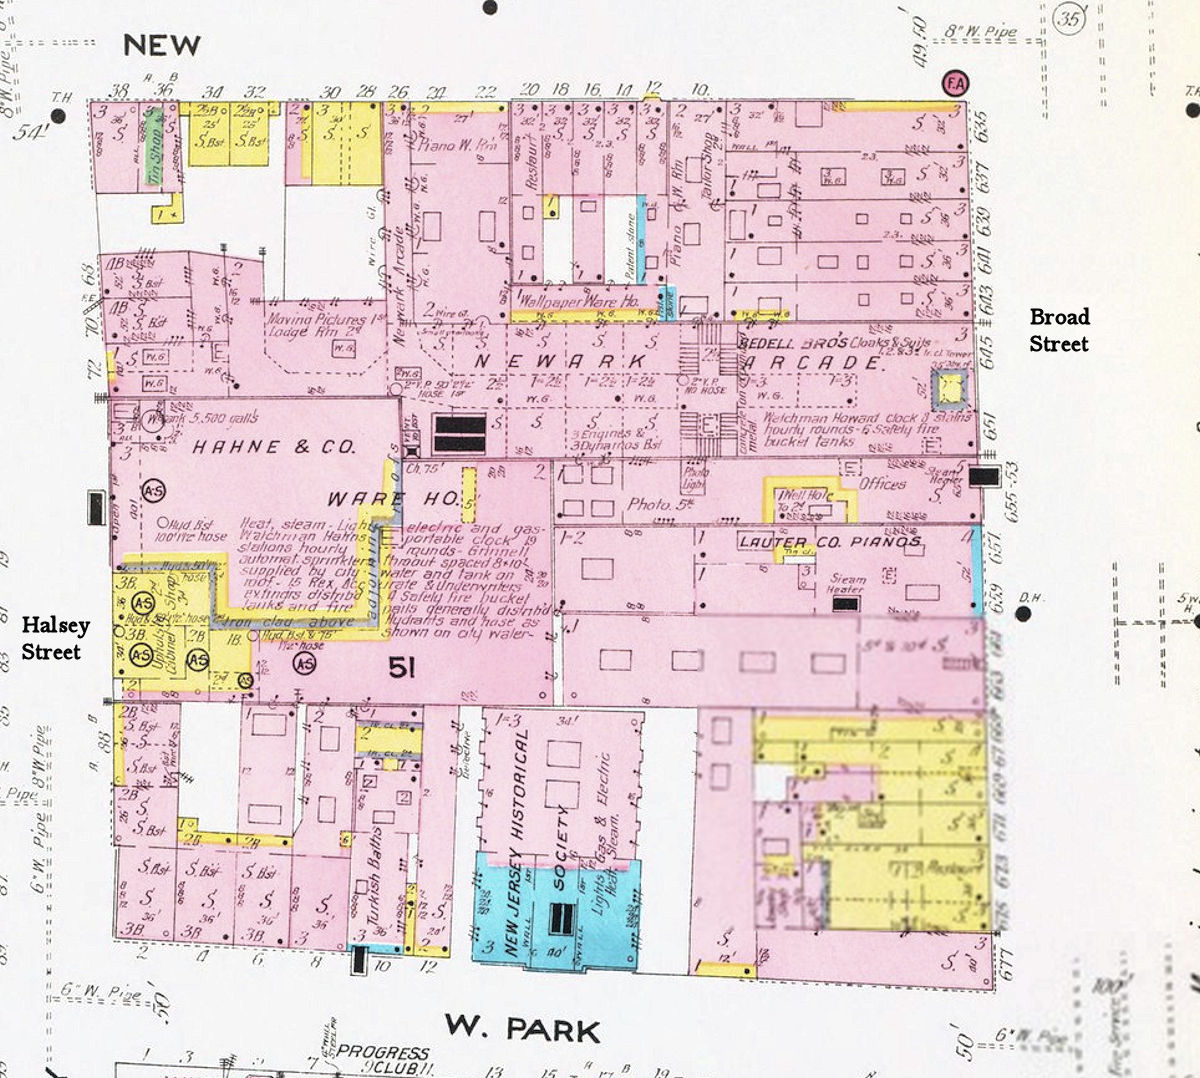 1908 Map
657-659 Broad Street Showroom
